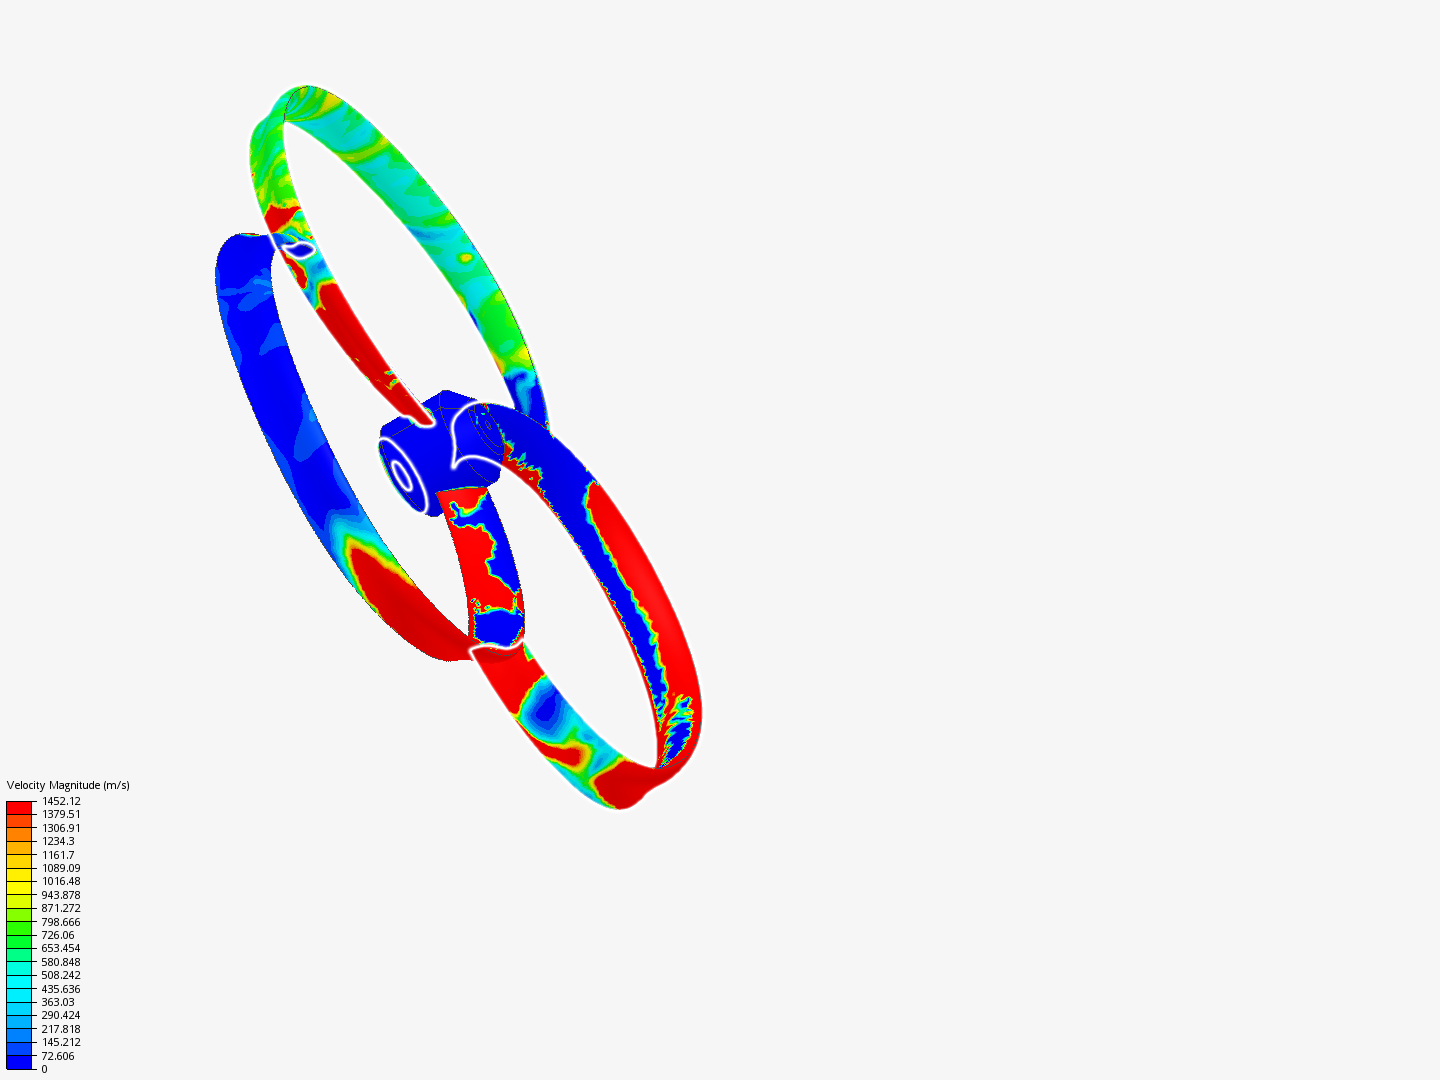 toroidal propeller - Copy image